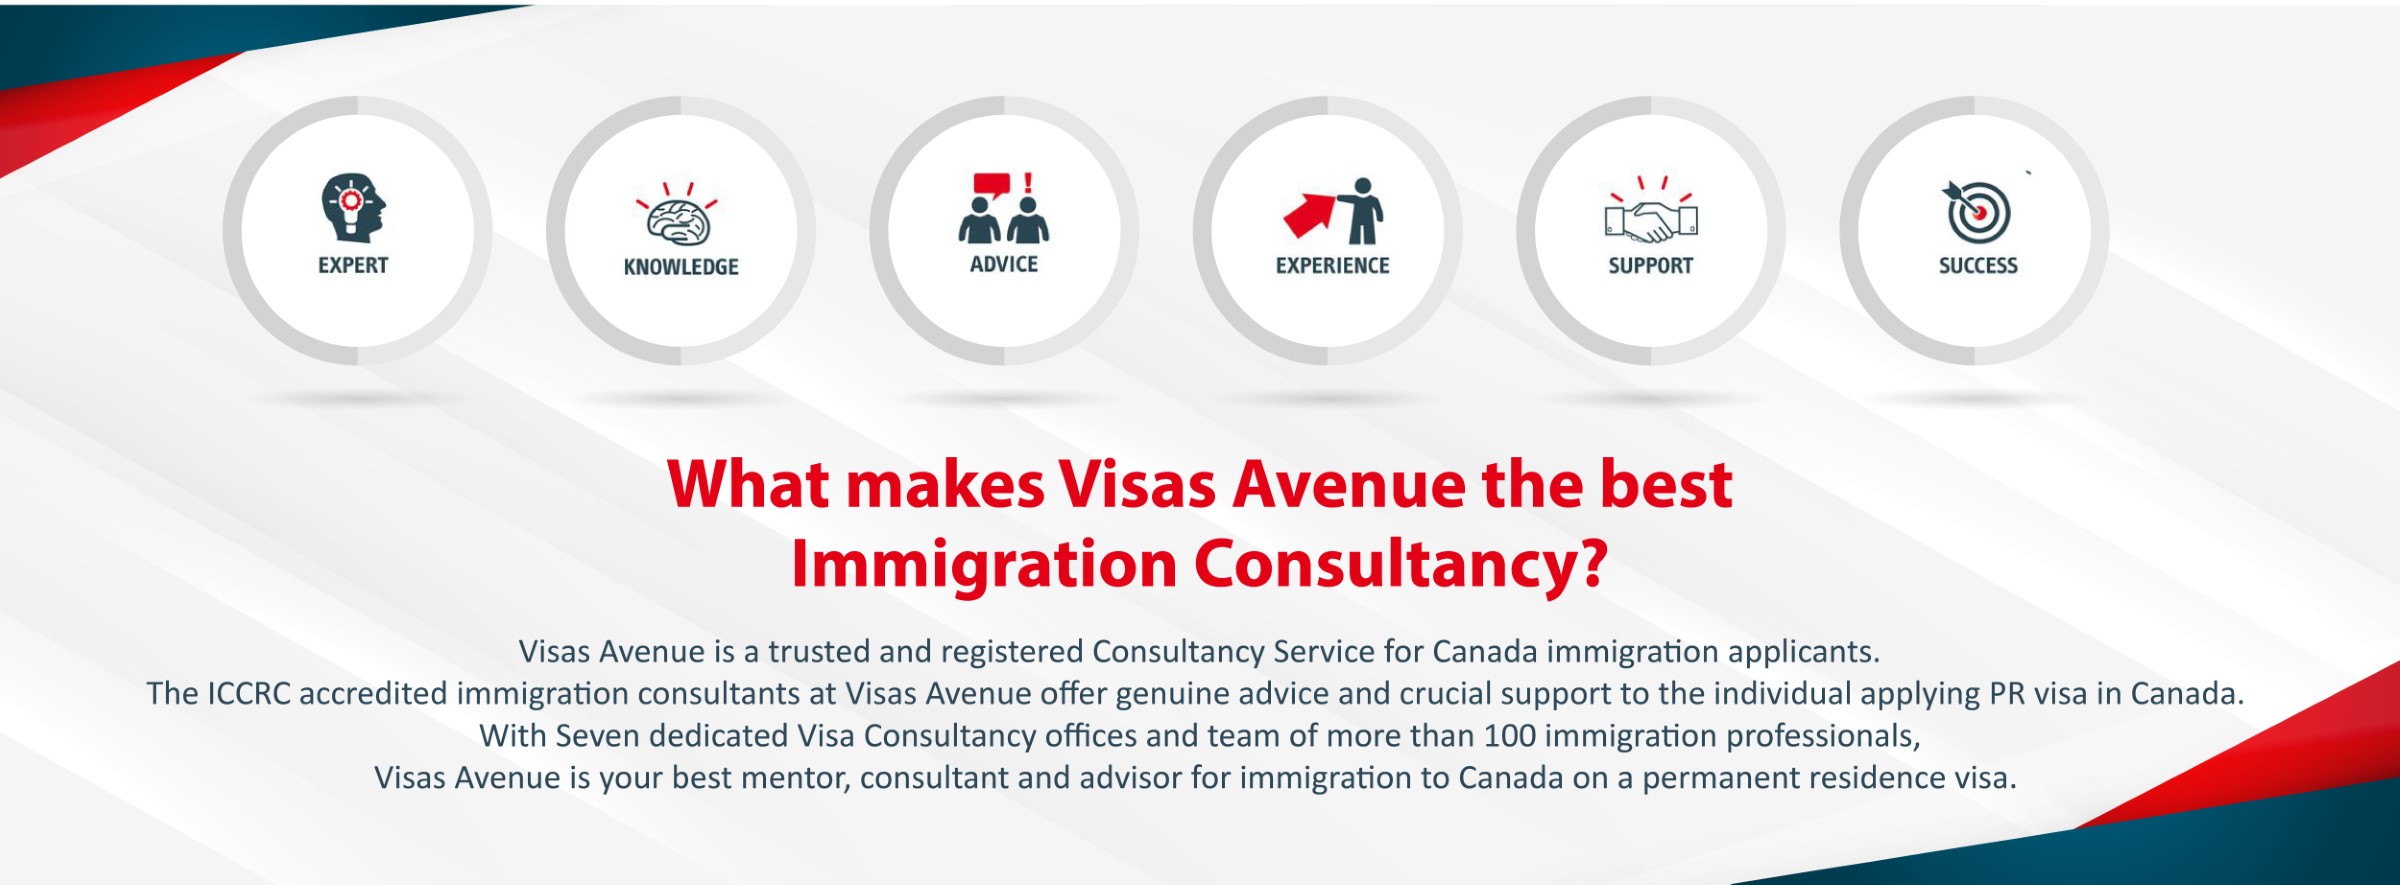 What makes Visas Avenue the best Immigration Consultancy?